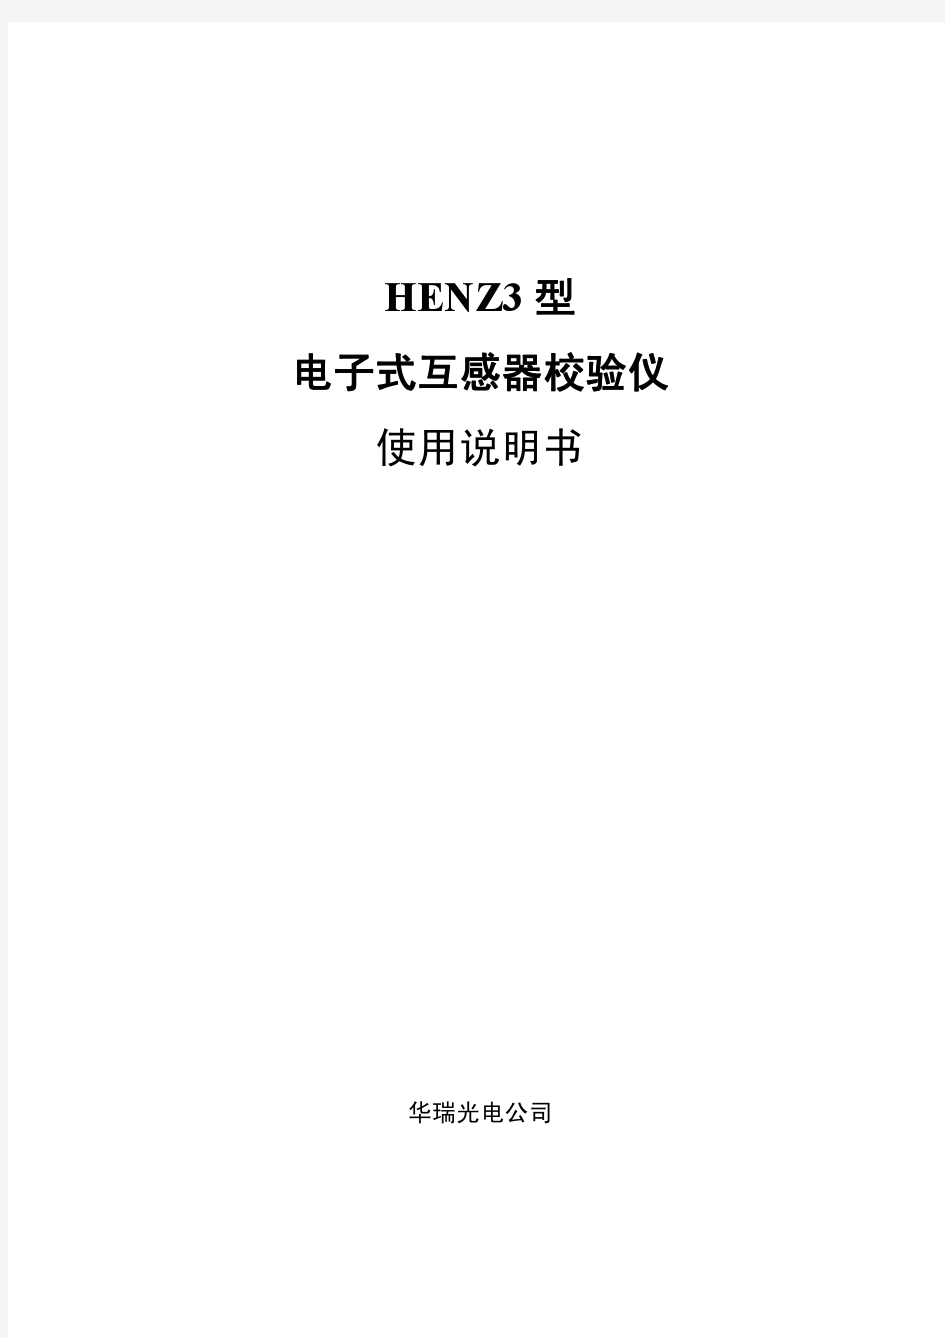 HENZ3型电子式互感器校验仪使用说明书2011